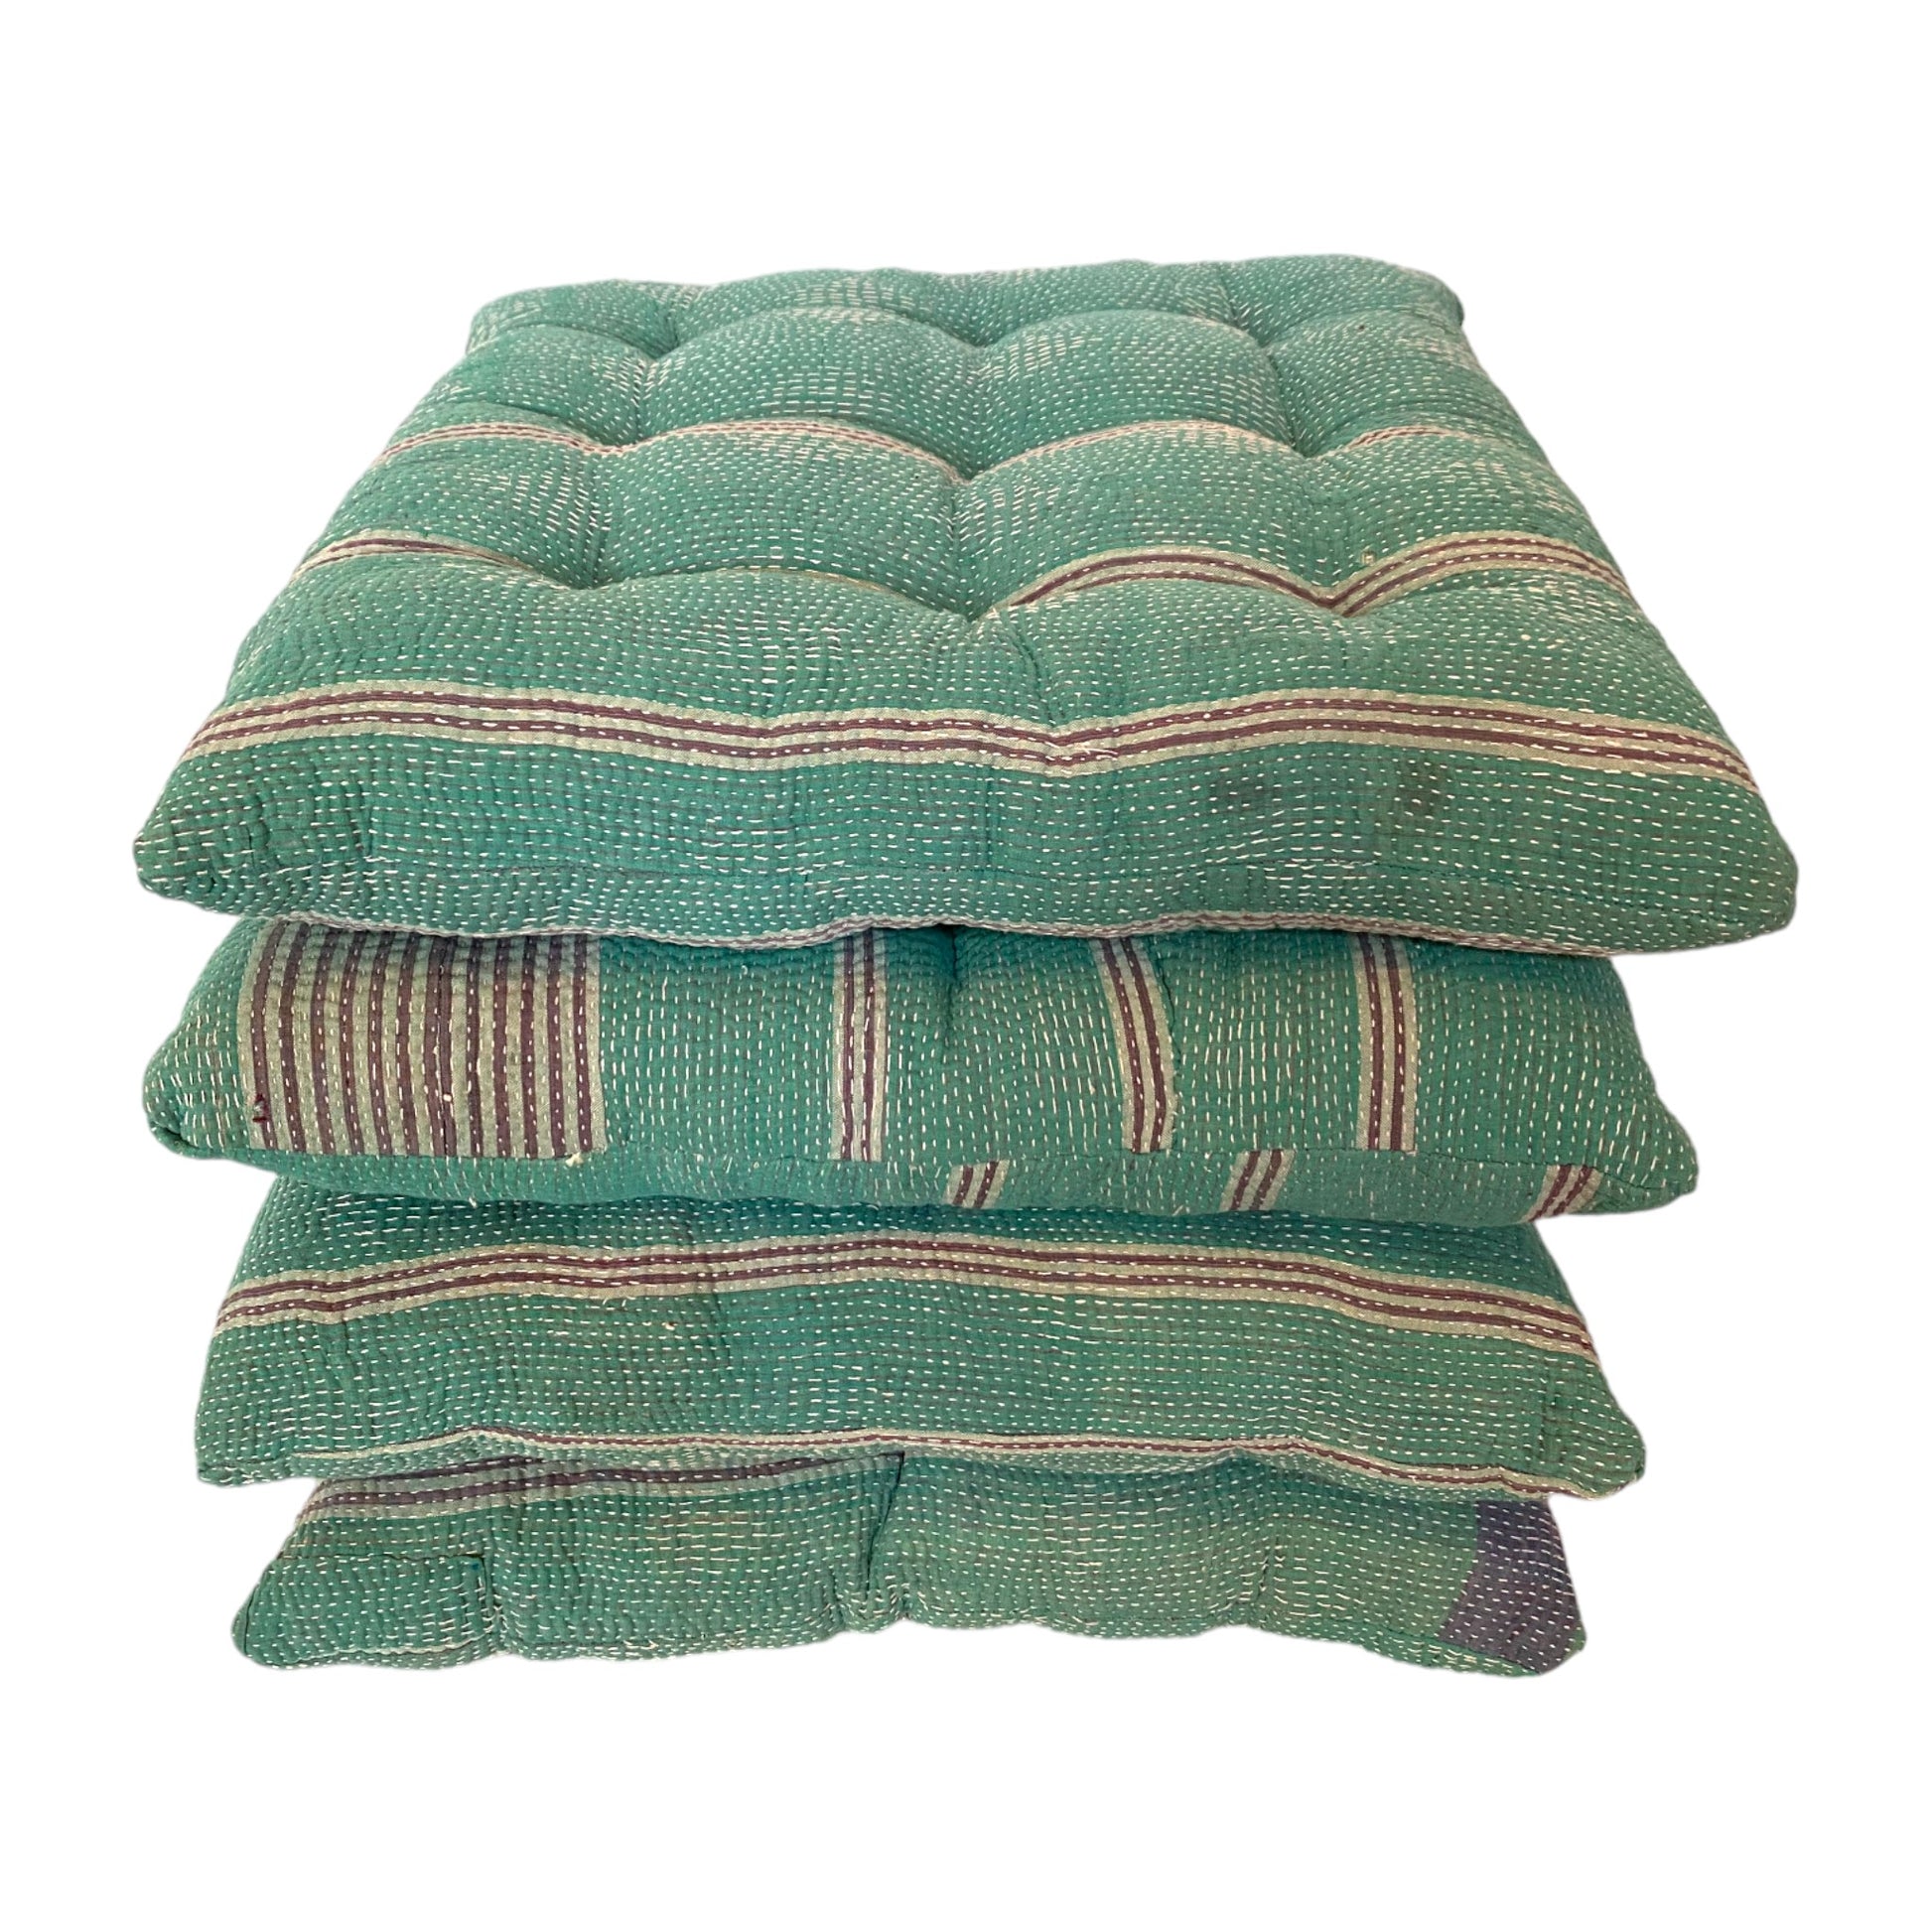 Green stripe kantha seat cushions